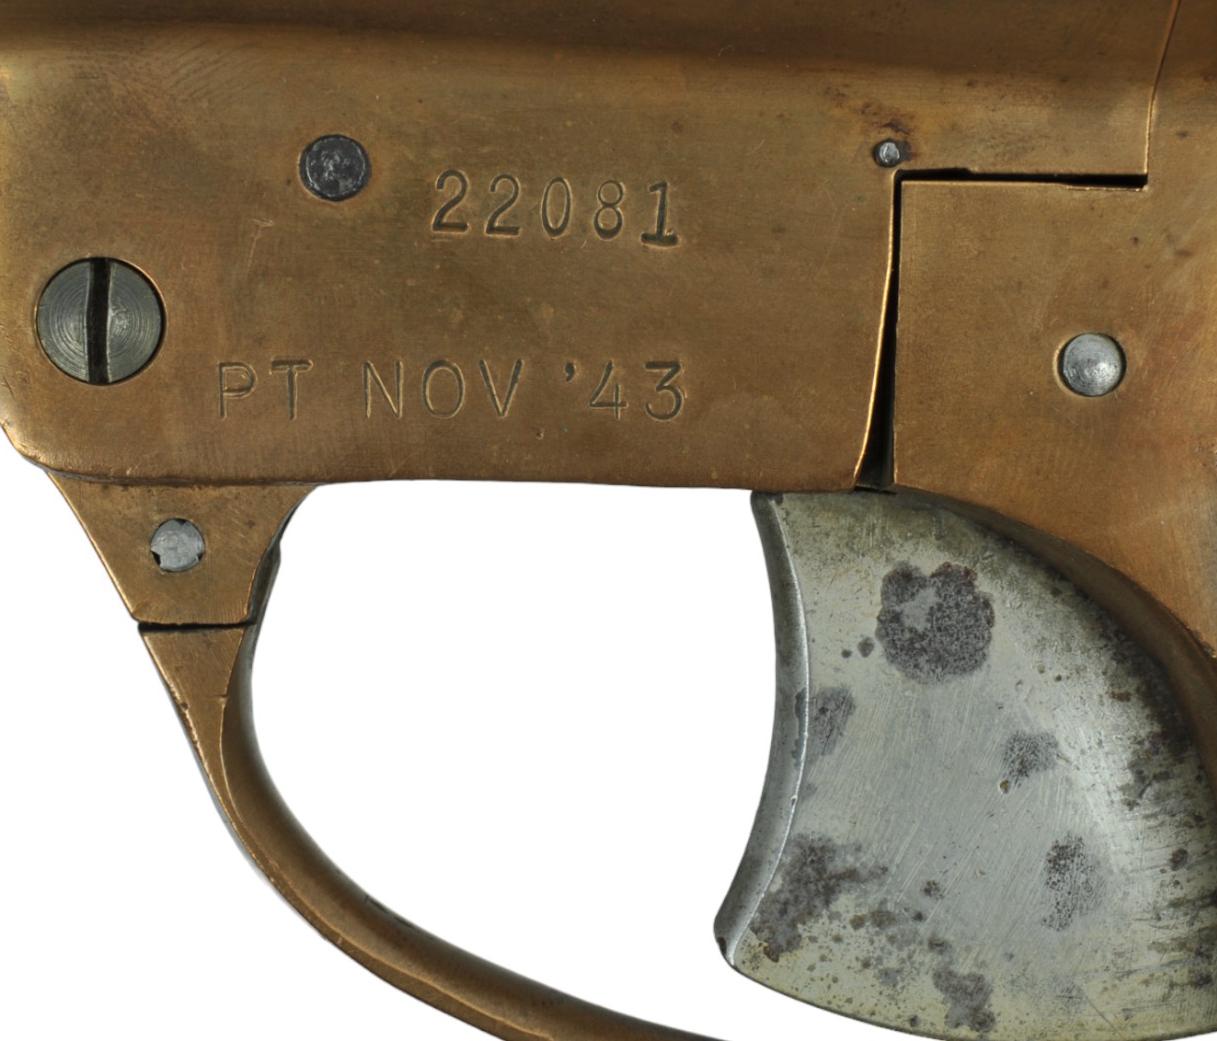 US Military WWII International Signal Flare Company Flare Gun (MOS1)